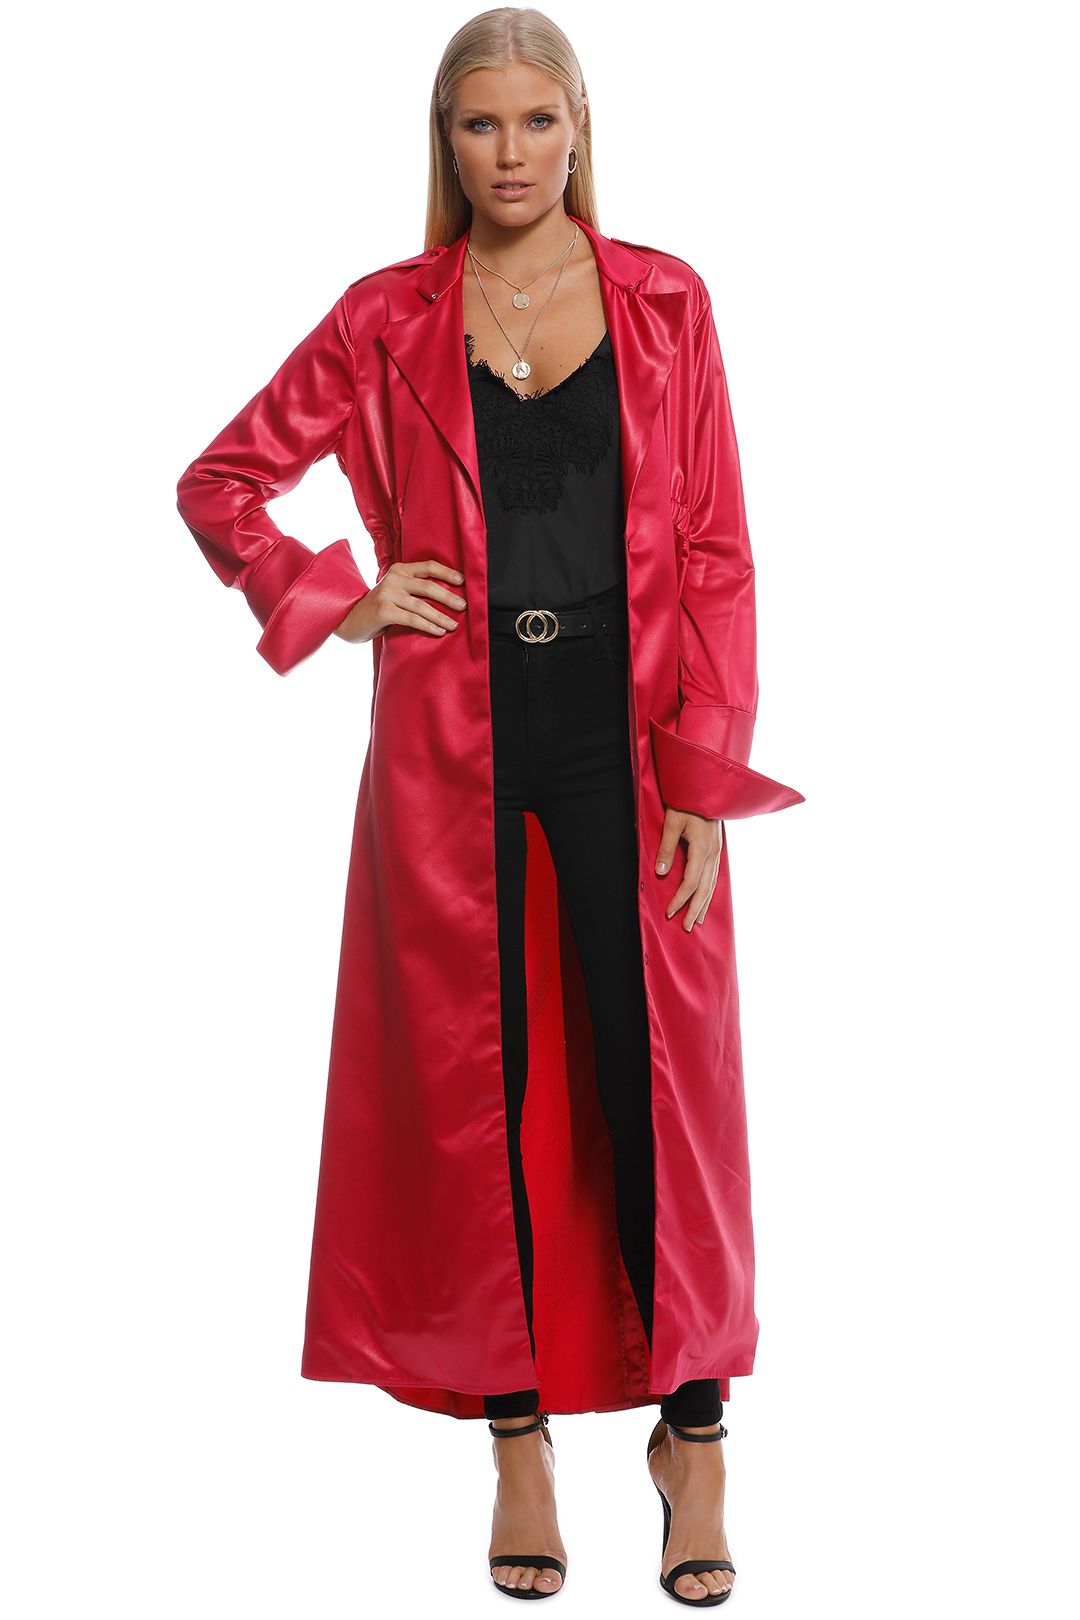 Ellery - Prophet Stand Collar Dress - Red - Front